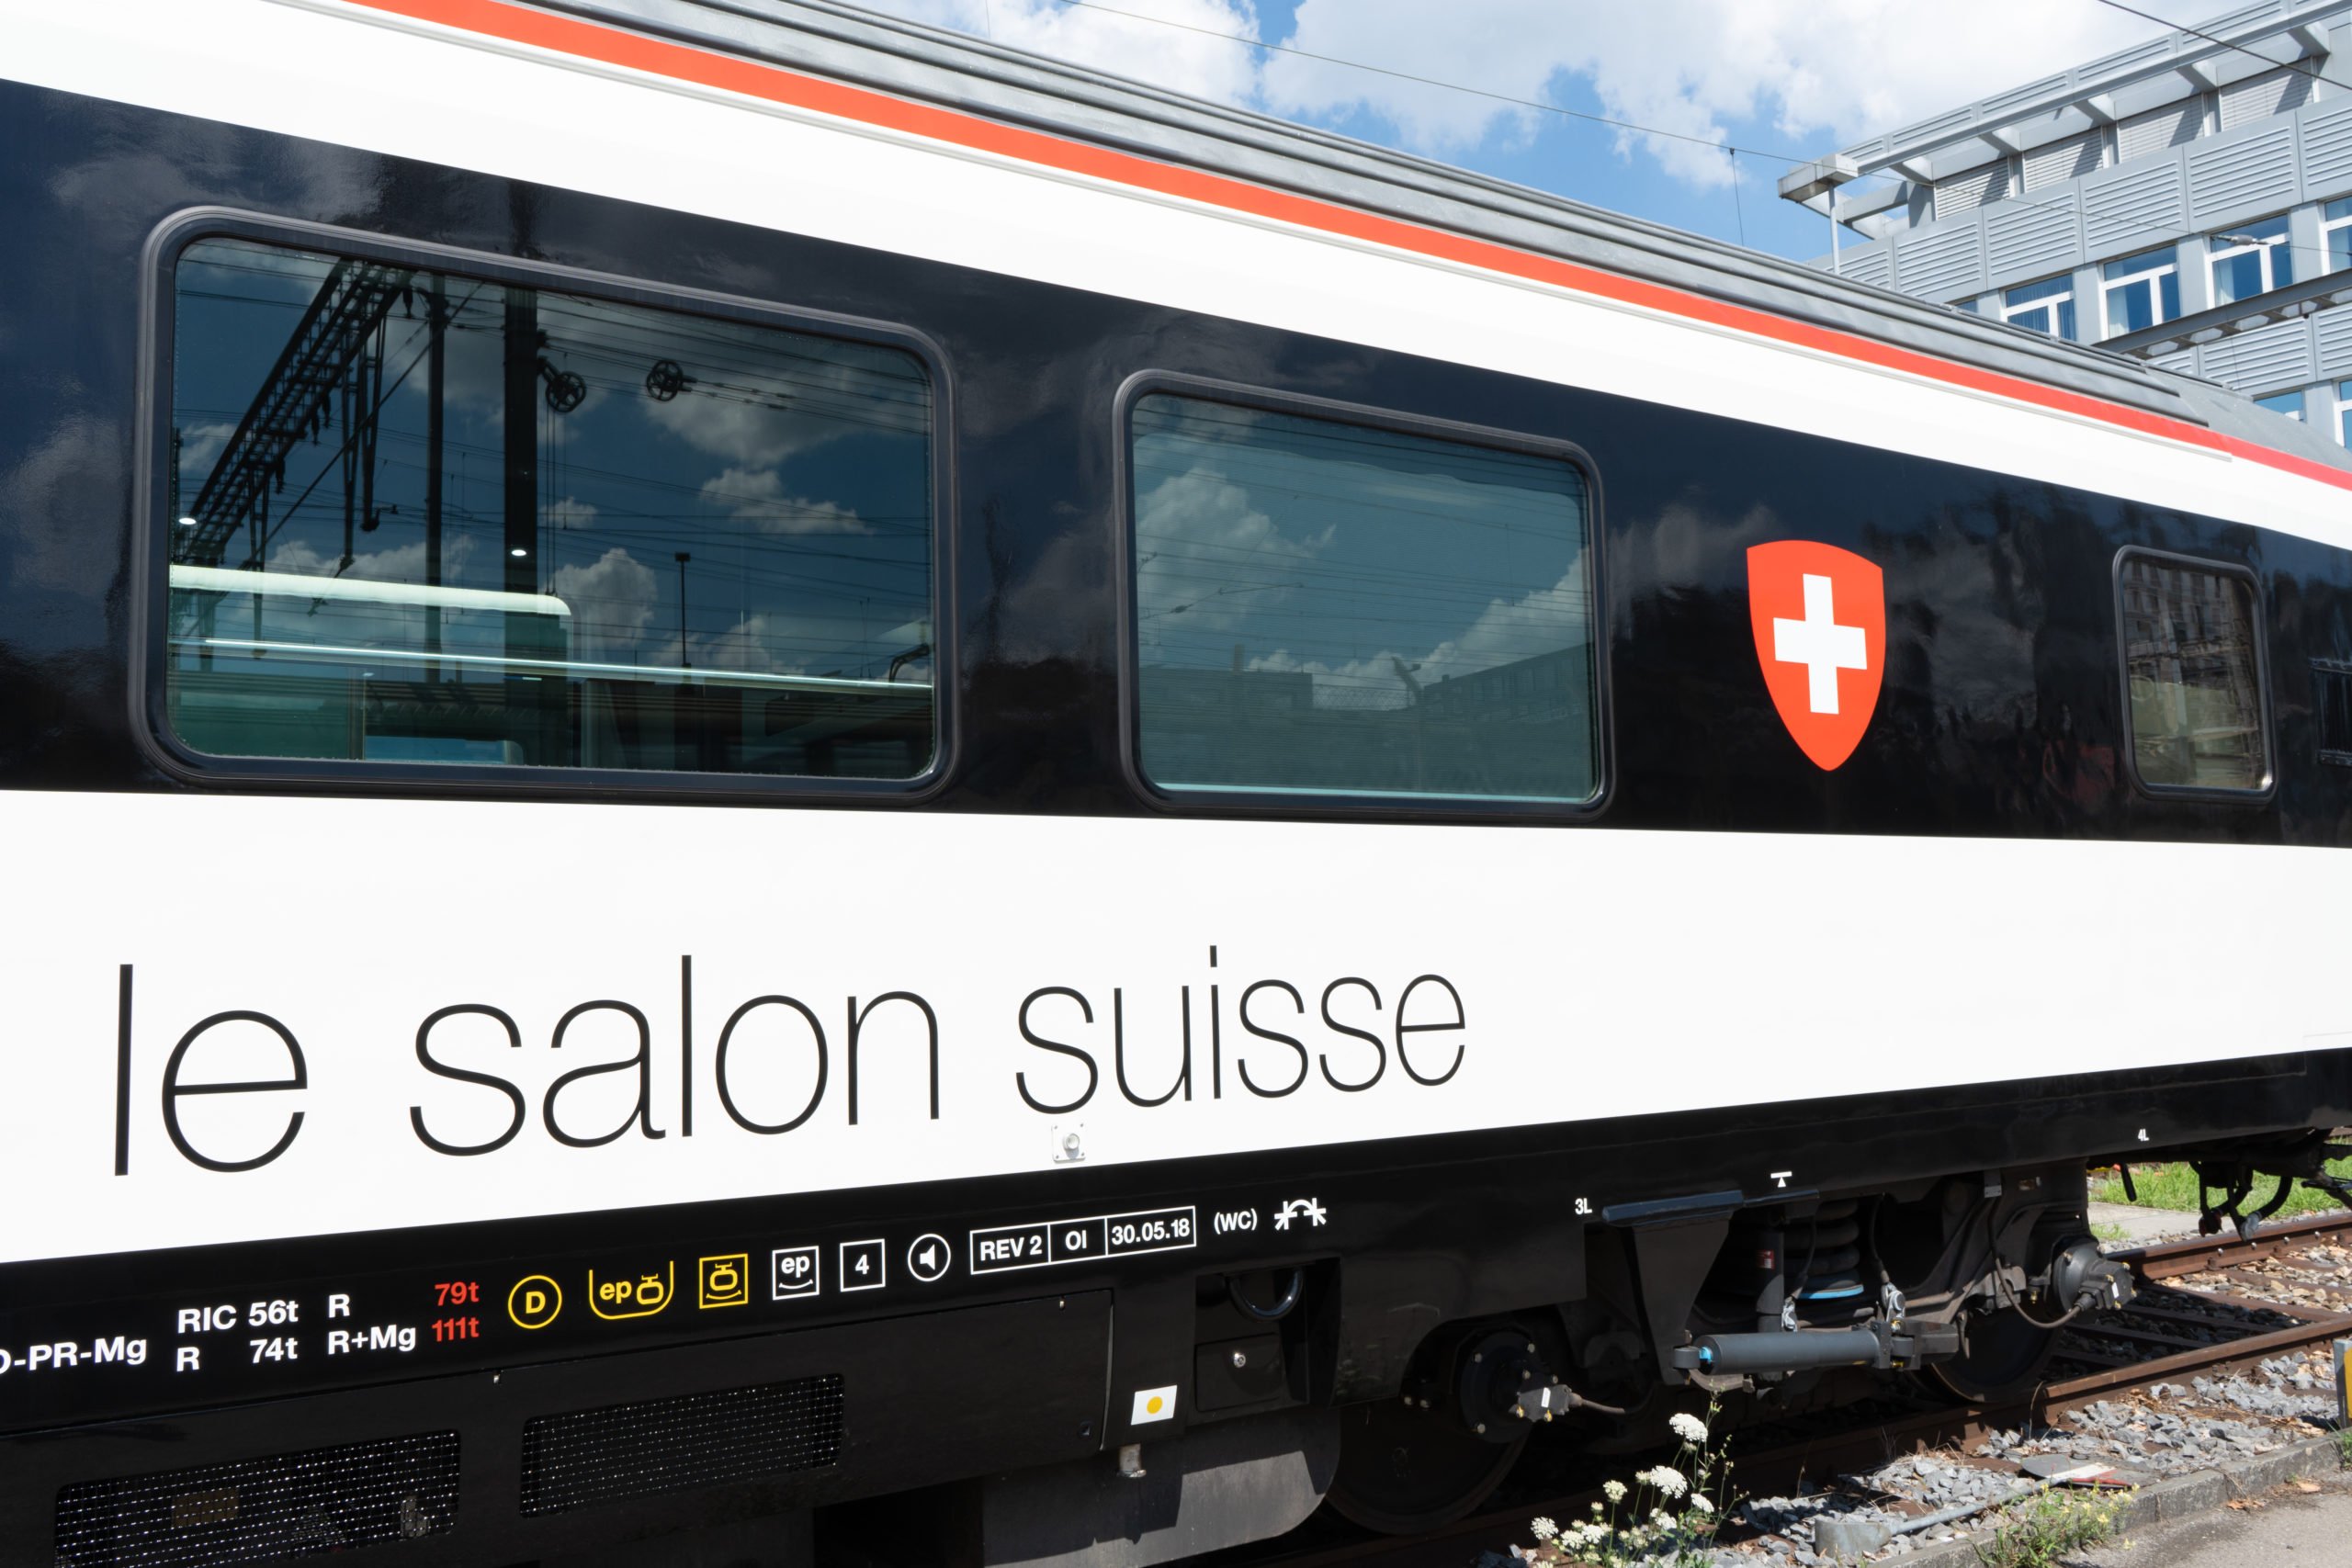 Reunion Cff Salon Suisse Railaway.jpg